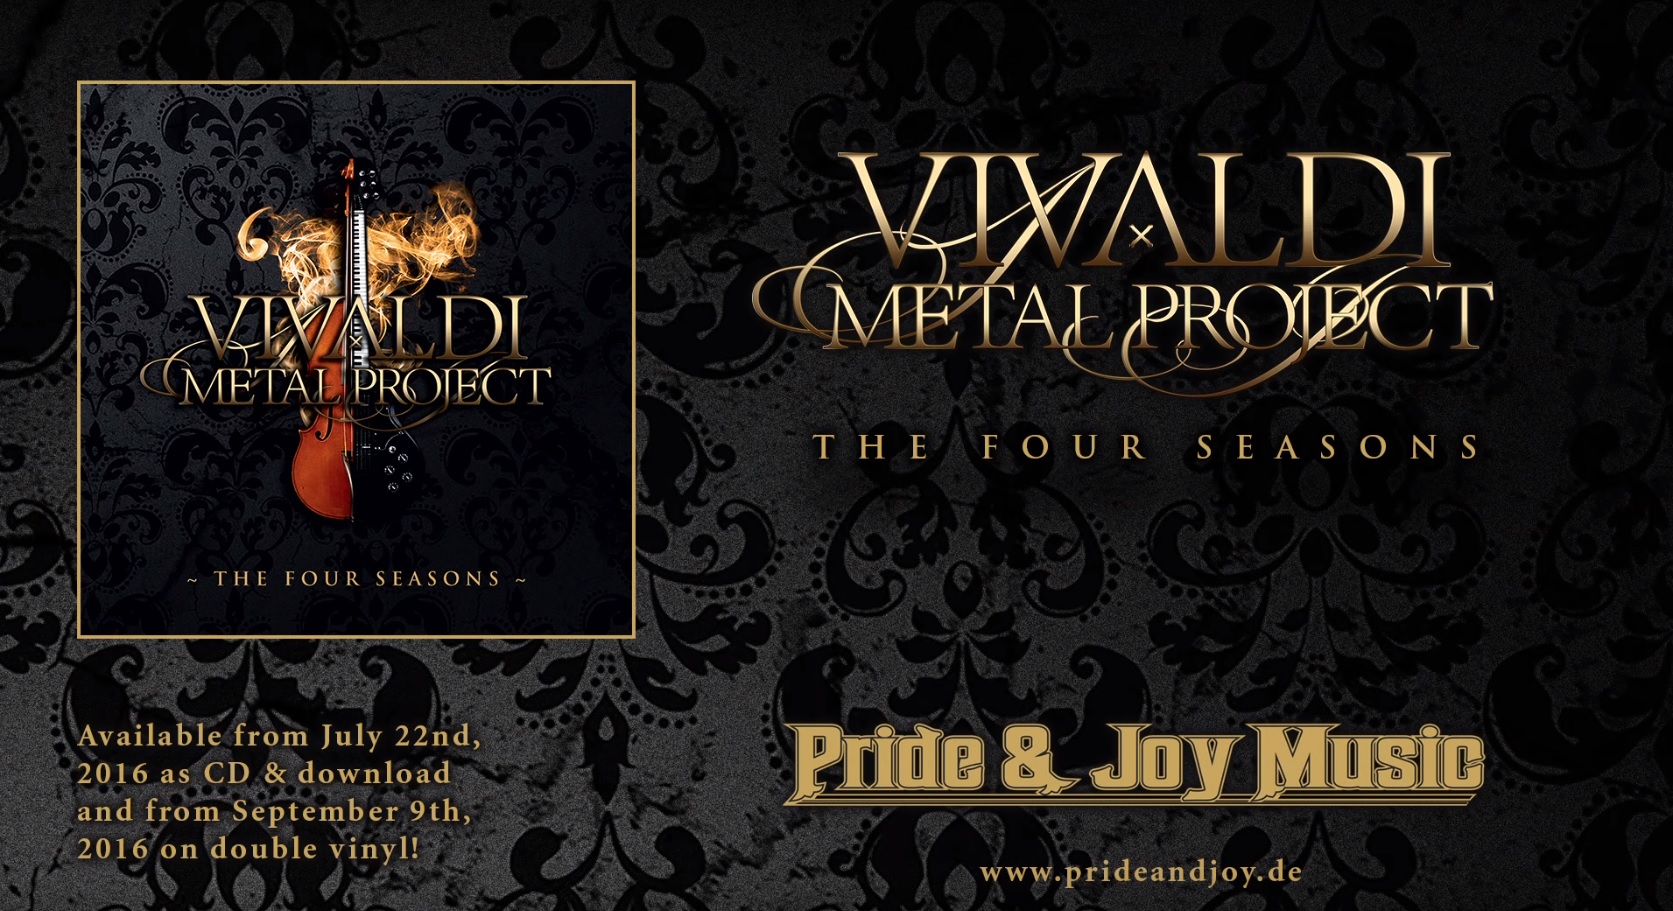 vivaldi metal project lyric video